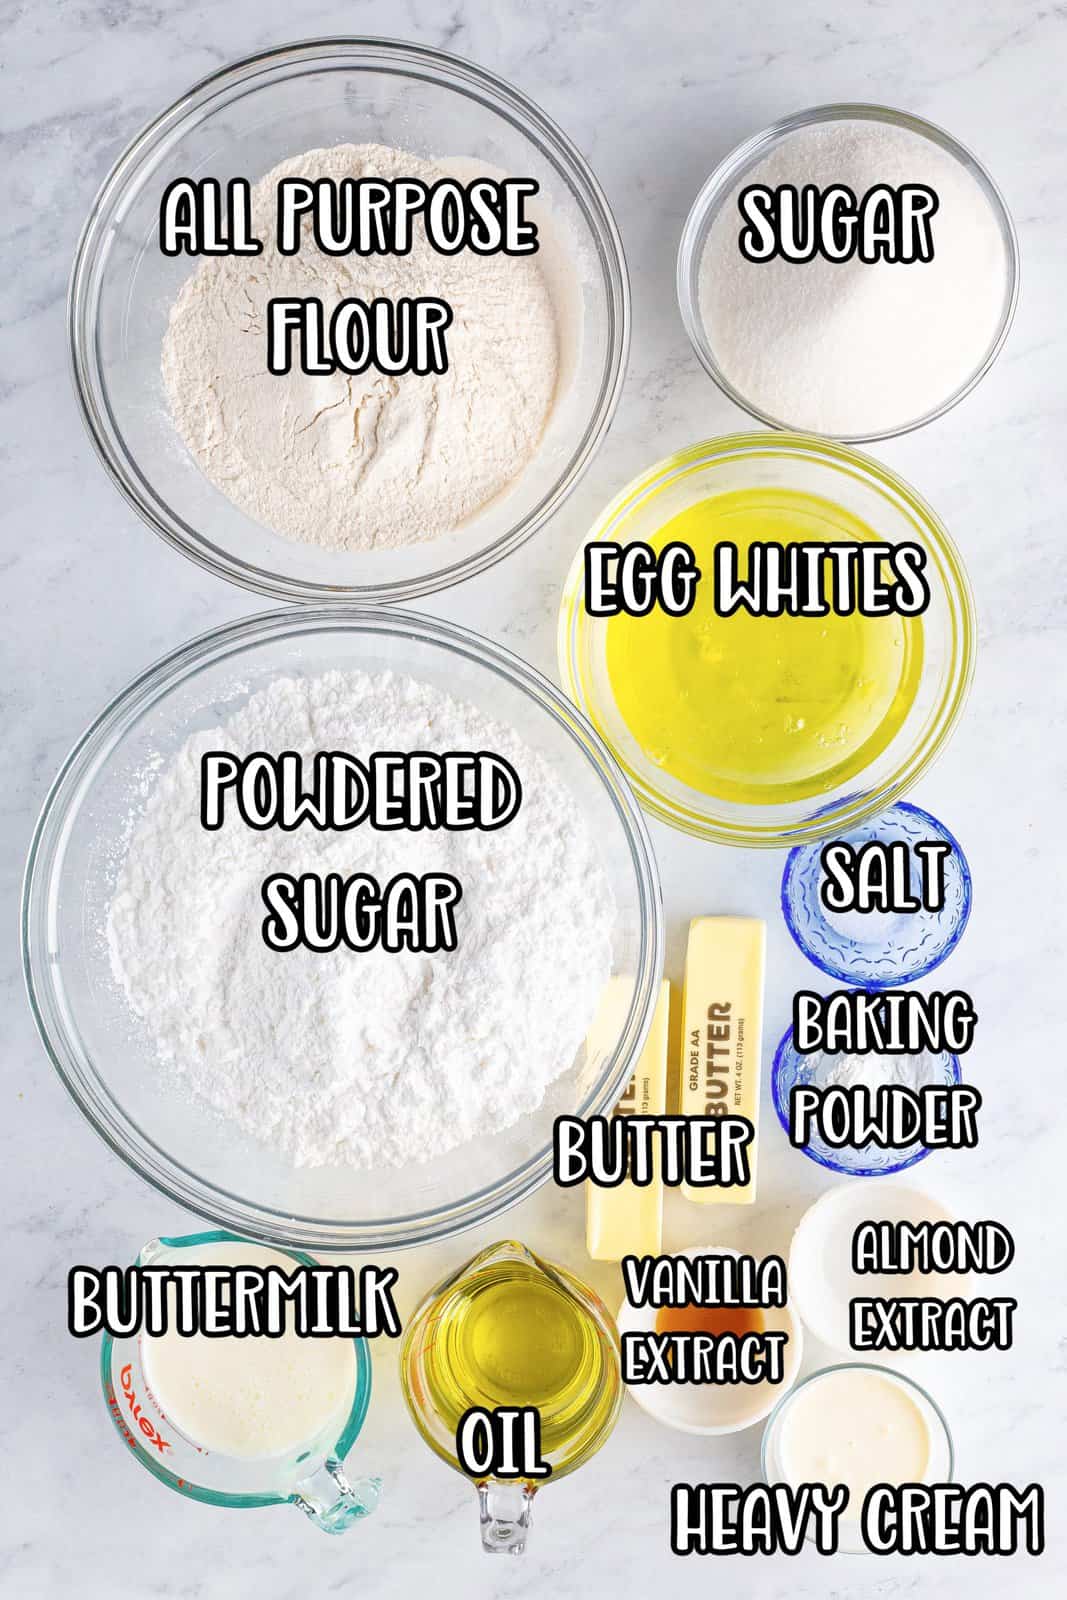 flour, oil, heavy cream, buttermilk, almond extract, vanilla extract, butter,  baking powder, oil, salt, powdered sugar and sugar. 